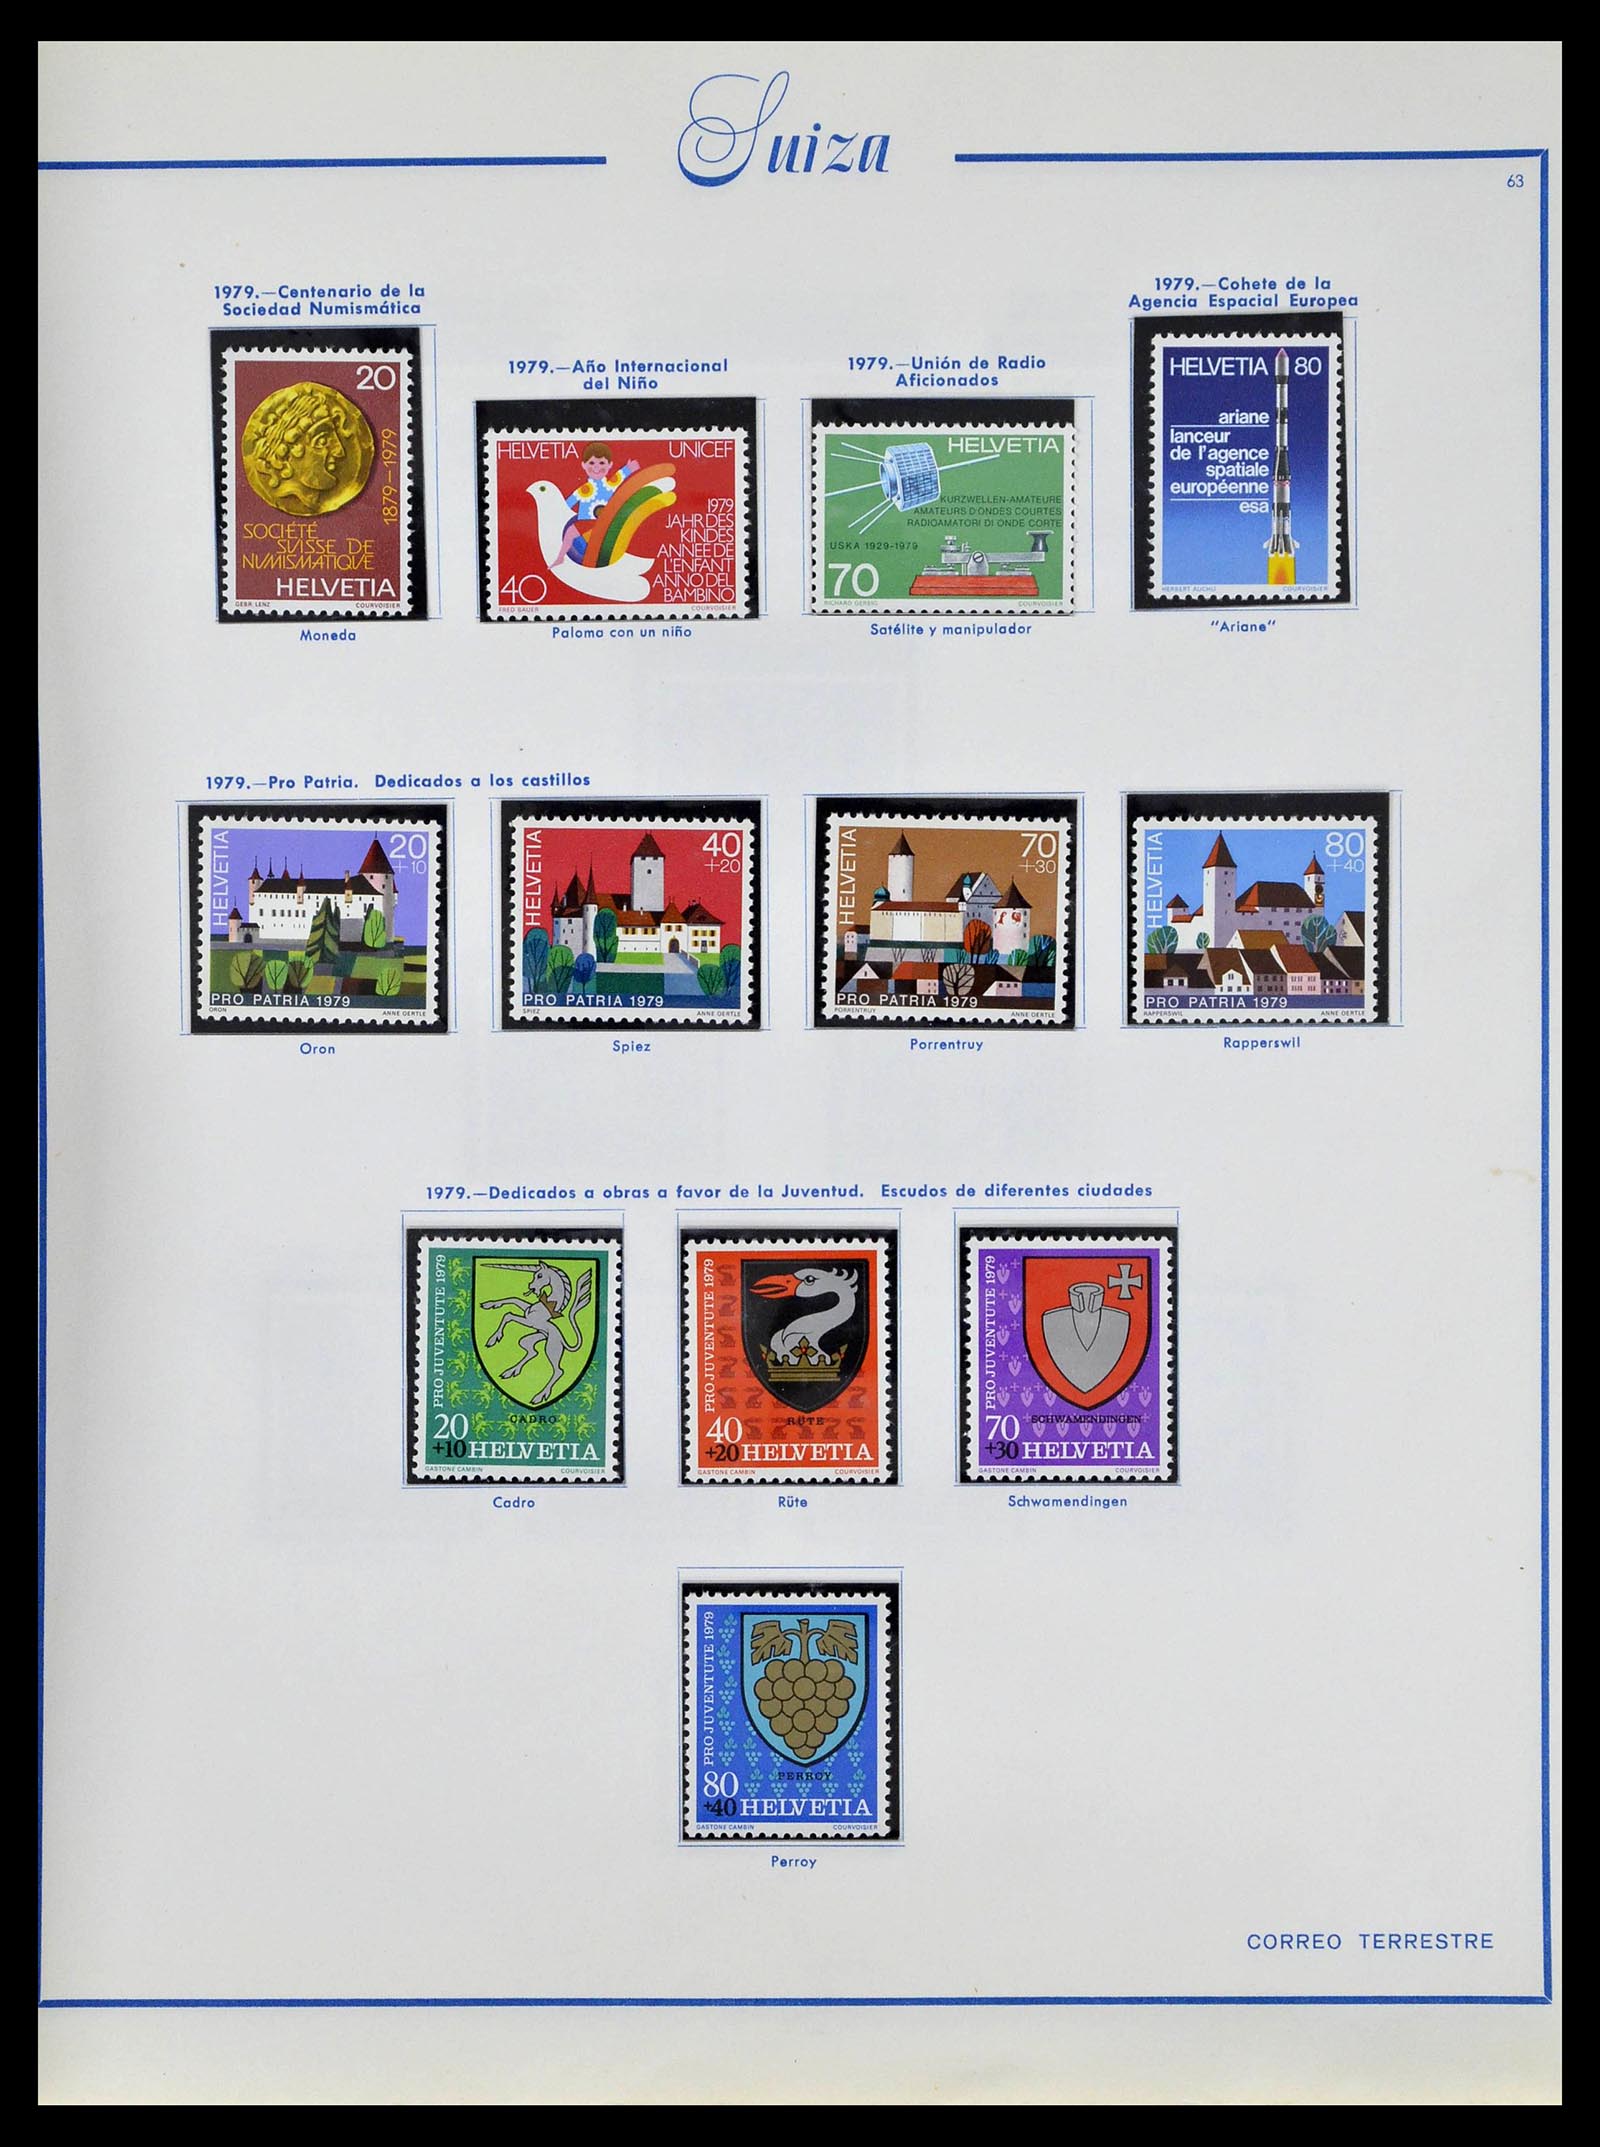 39217 0070 - Stamp collection 39217 Switzerland 1850-1986.